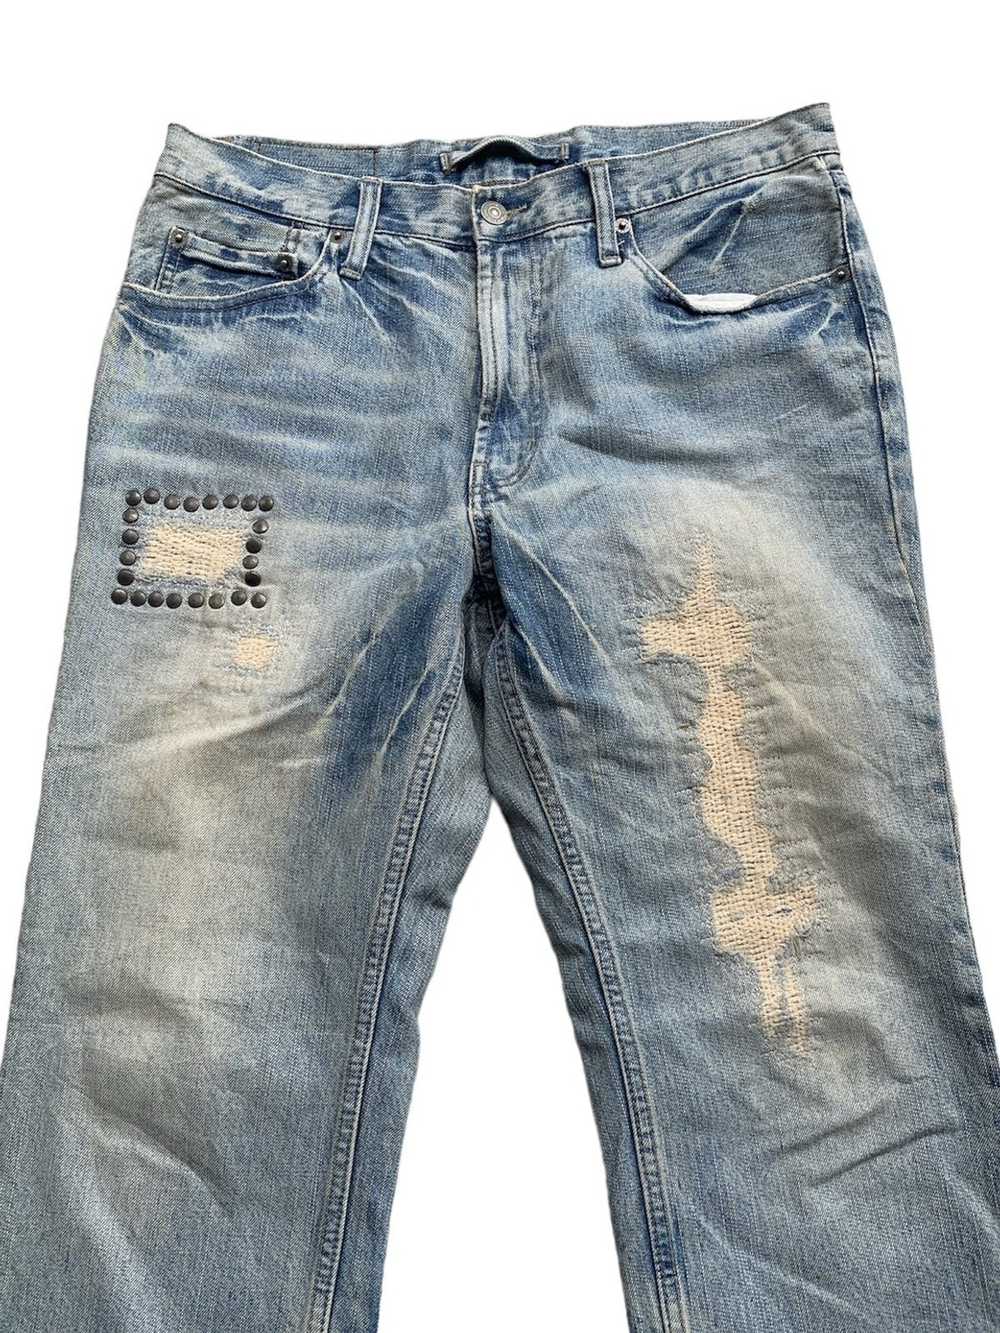 PPFM PPFM Distressed Denim Jeans - image 3